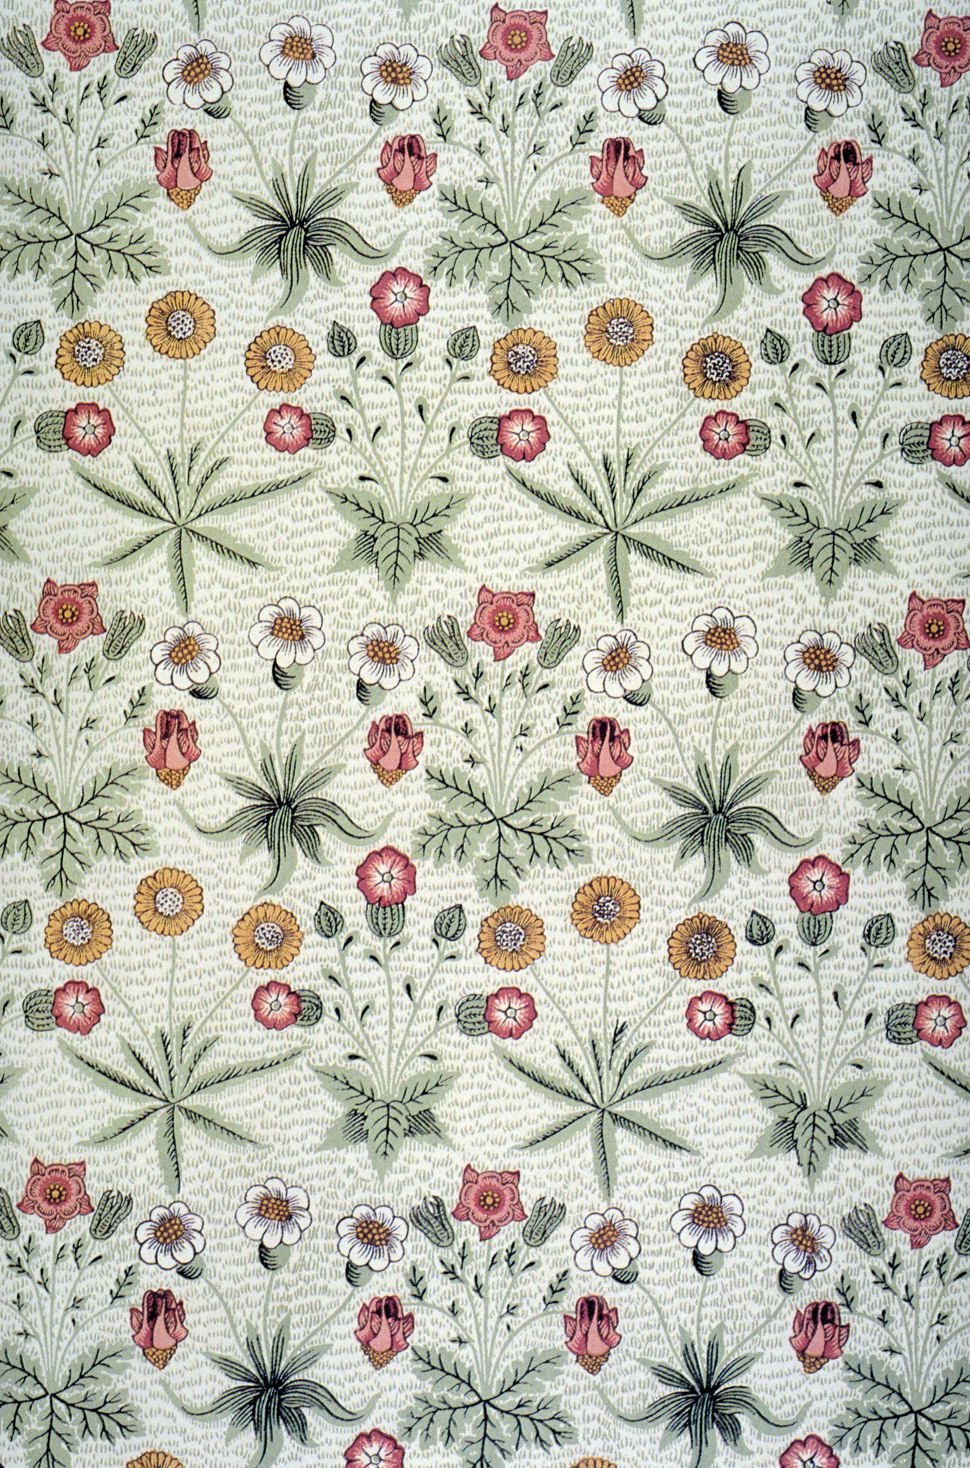 Vintage Ephemera Daisy Wallpaper Designed By William Morris